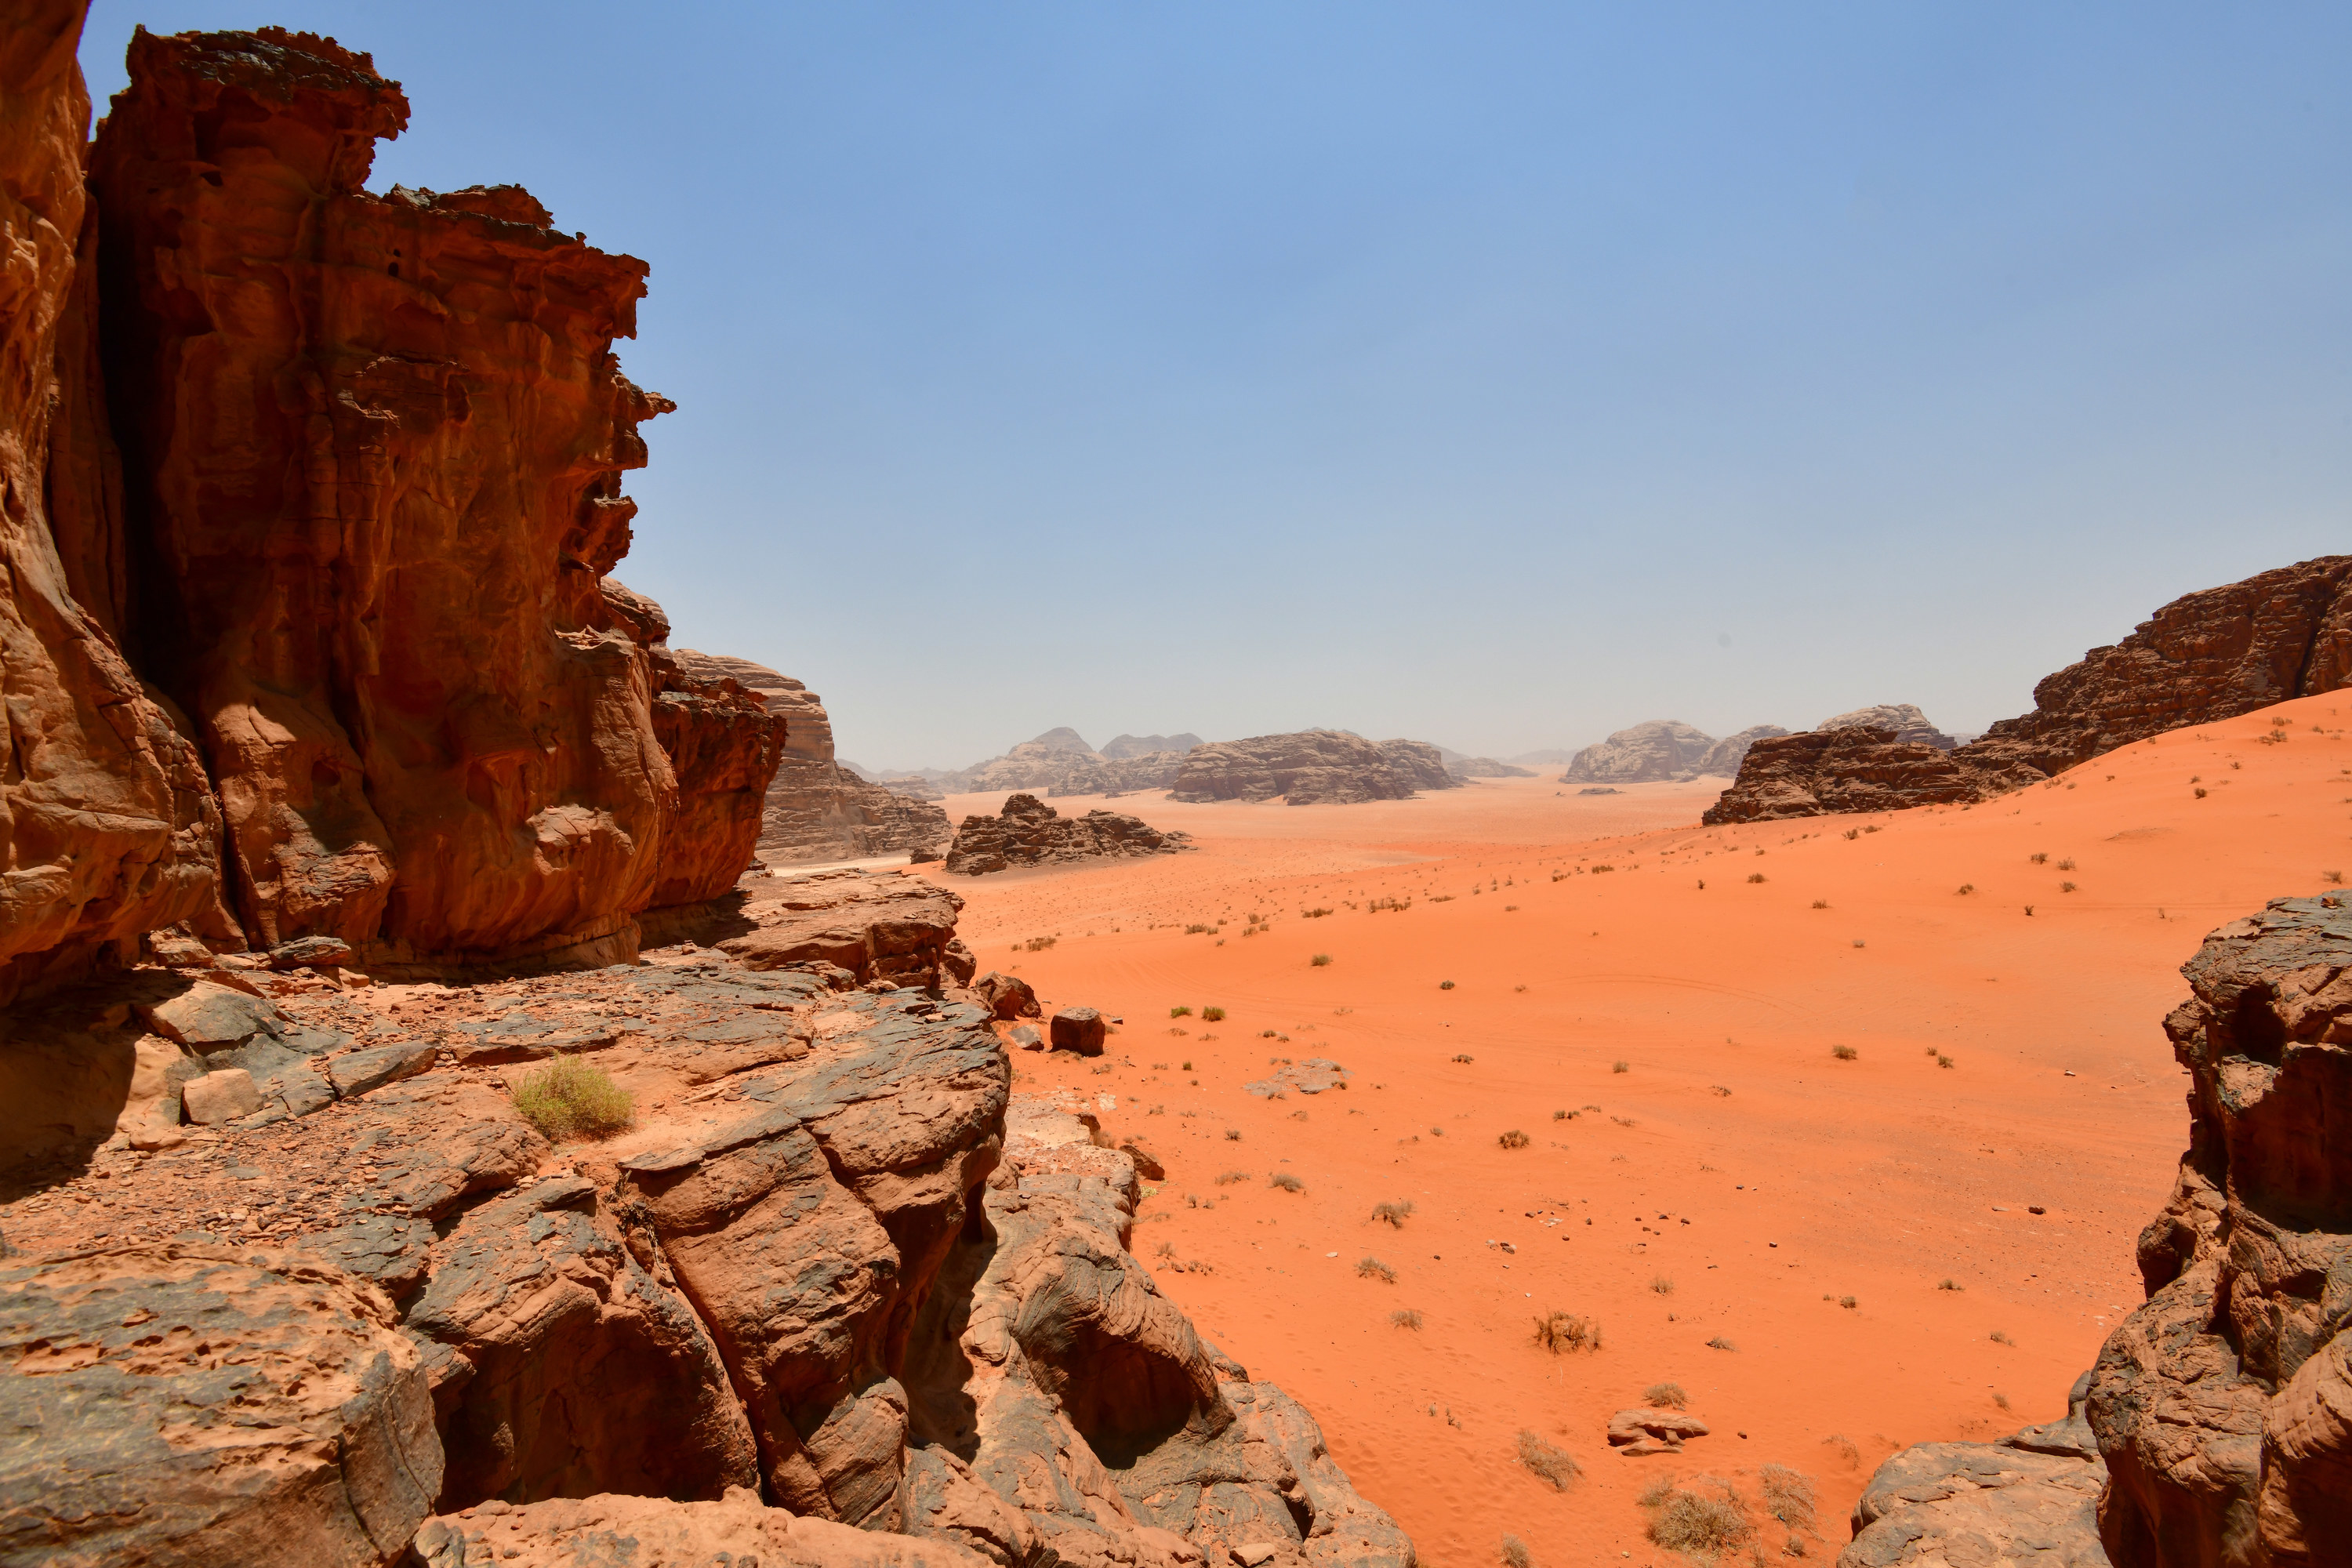 A rocky landscape in a desert.